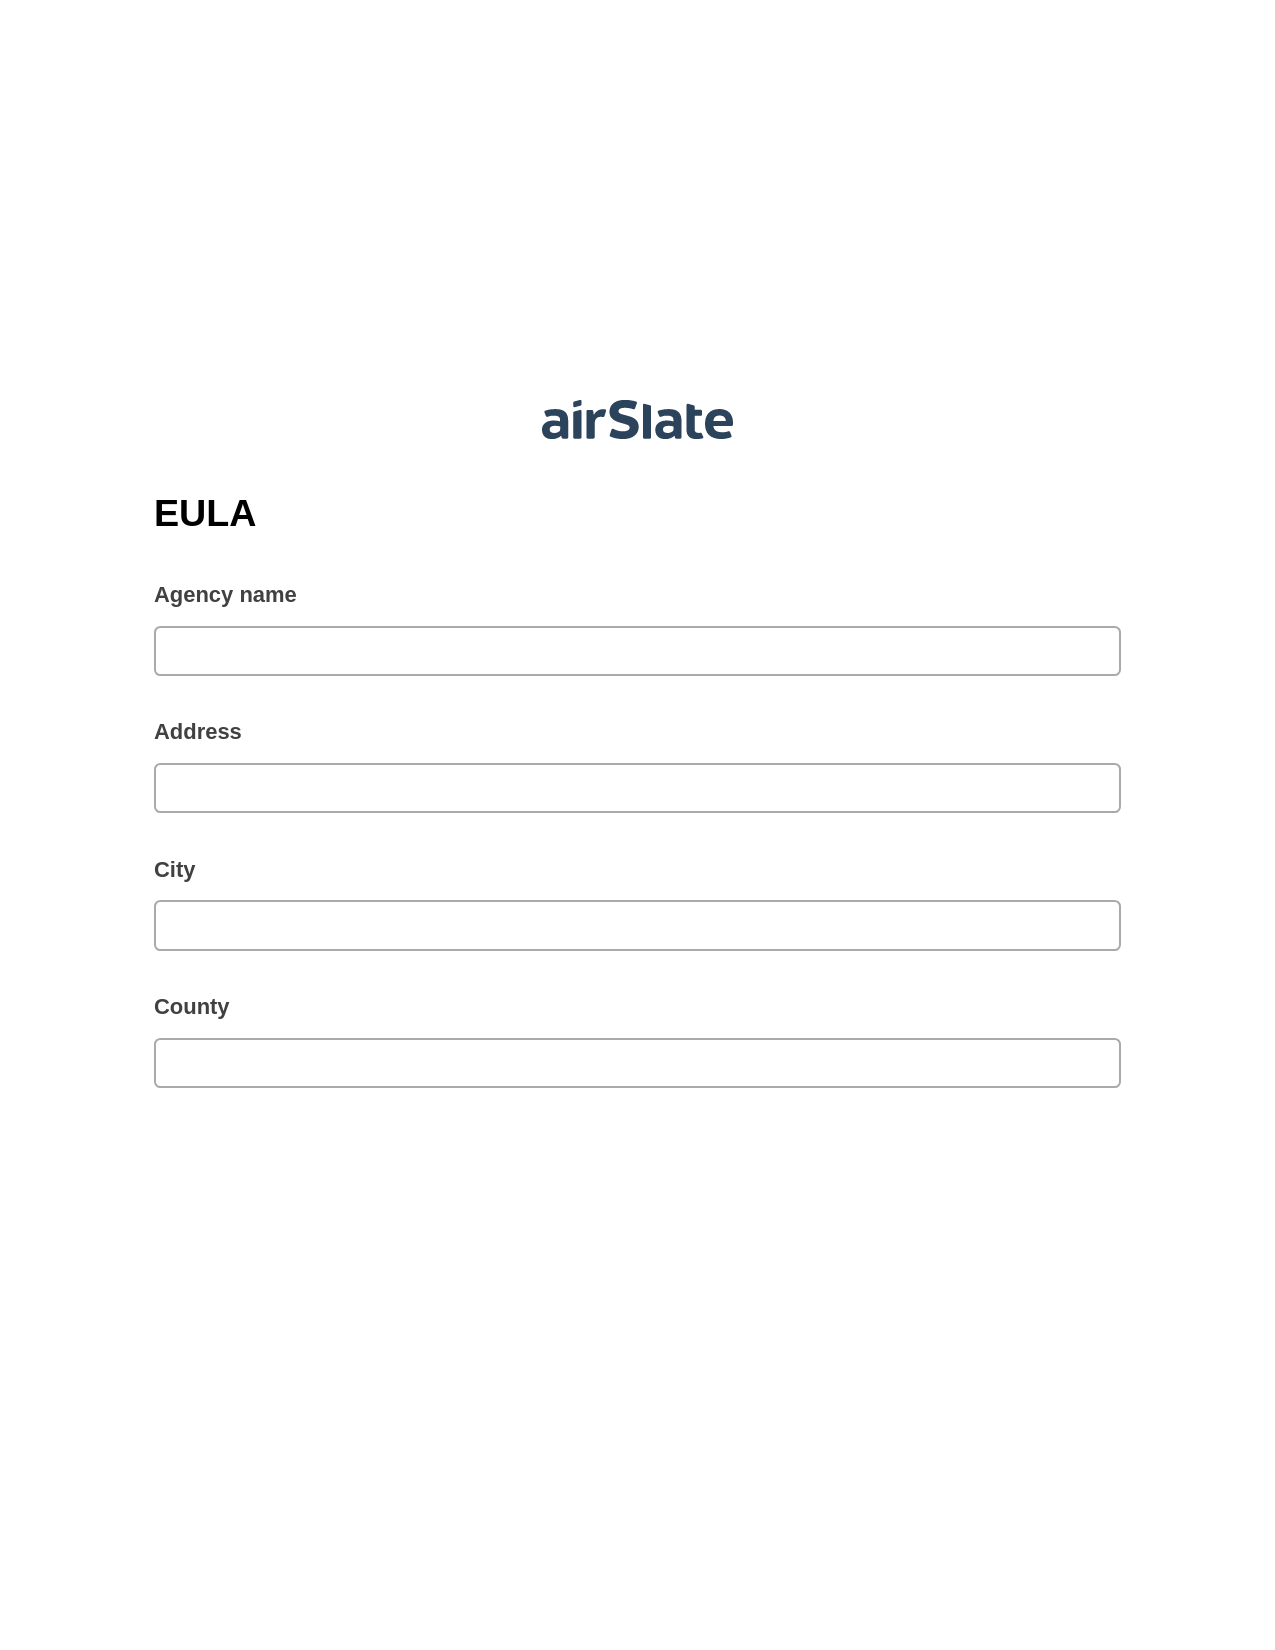 EULA Pre-fill from Google Sheets Bot, Remove Slate Bot, Box Bot